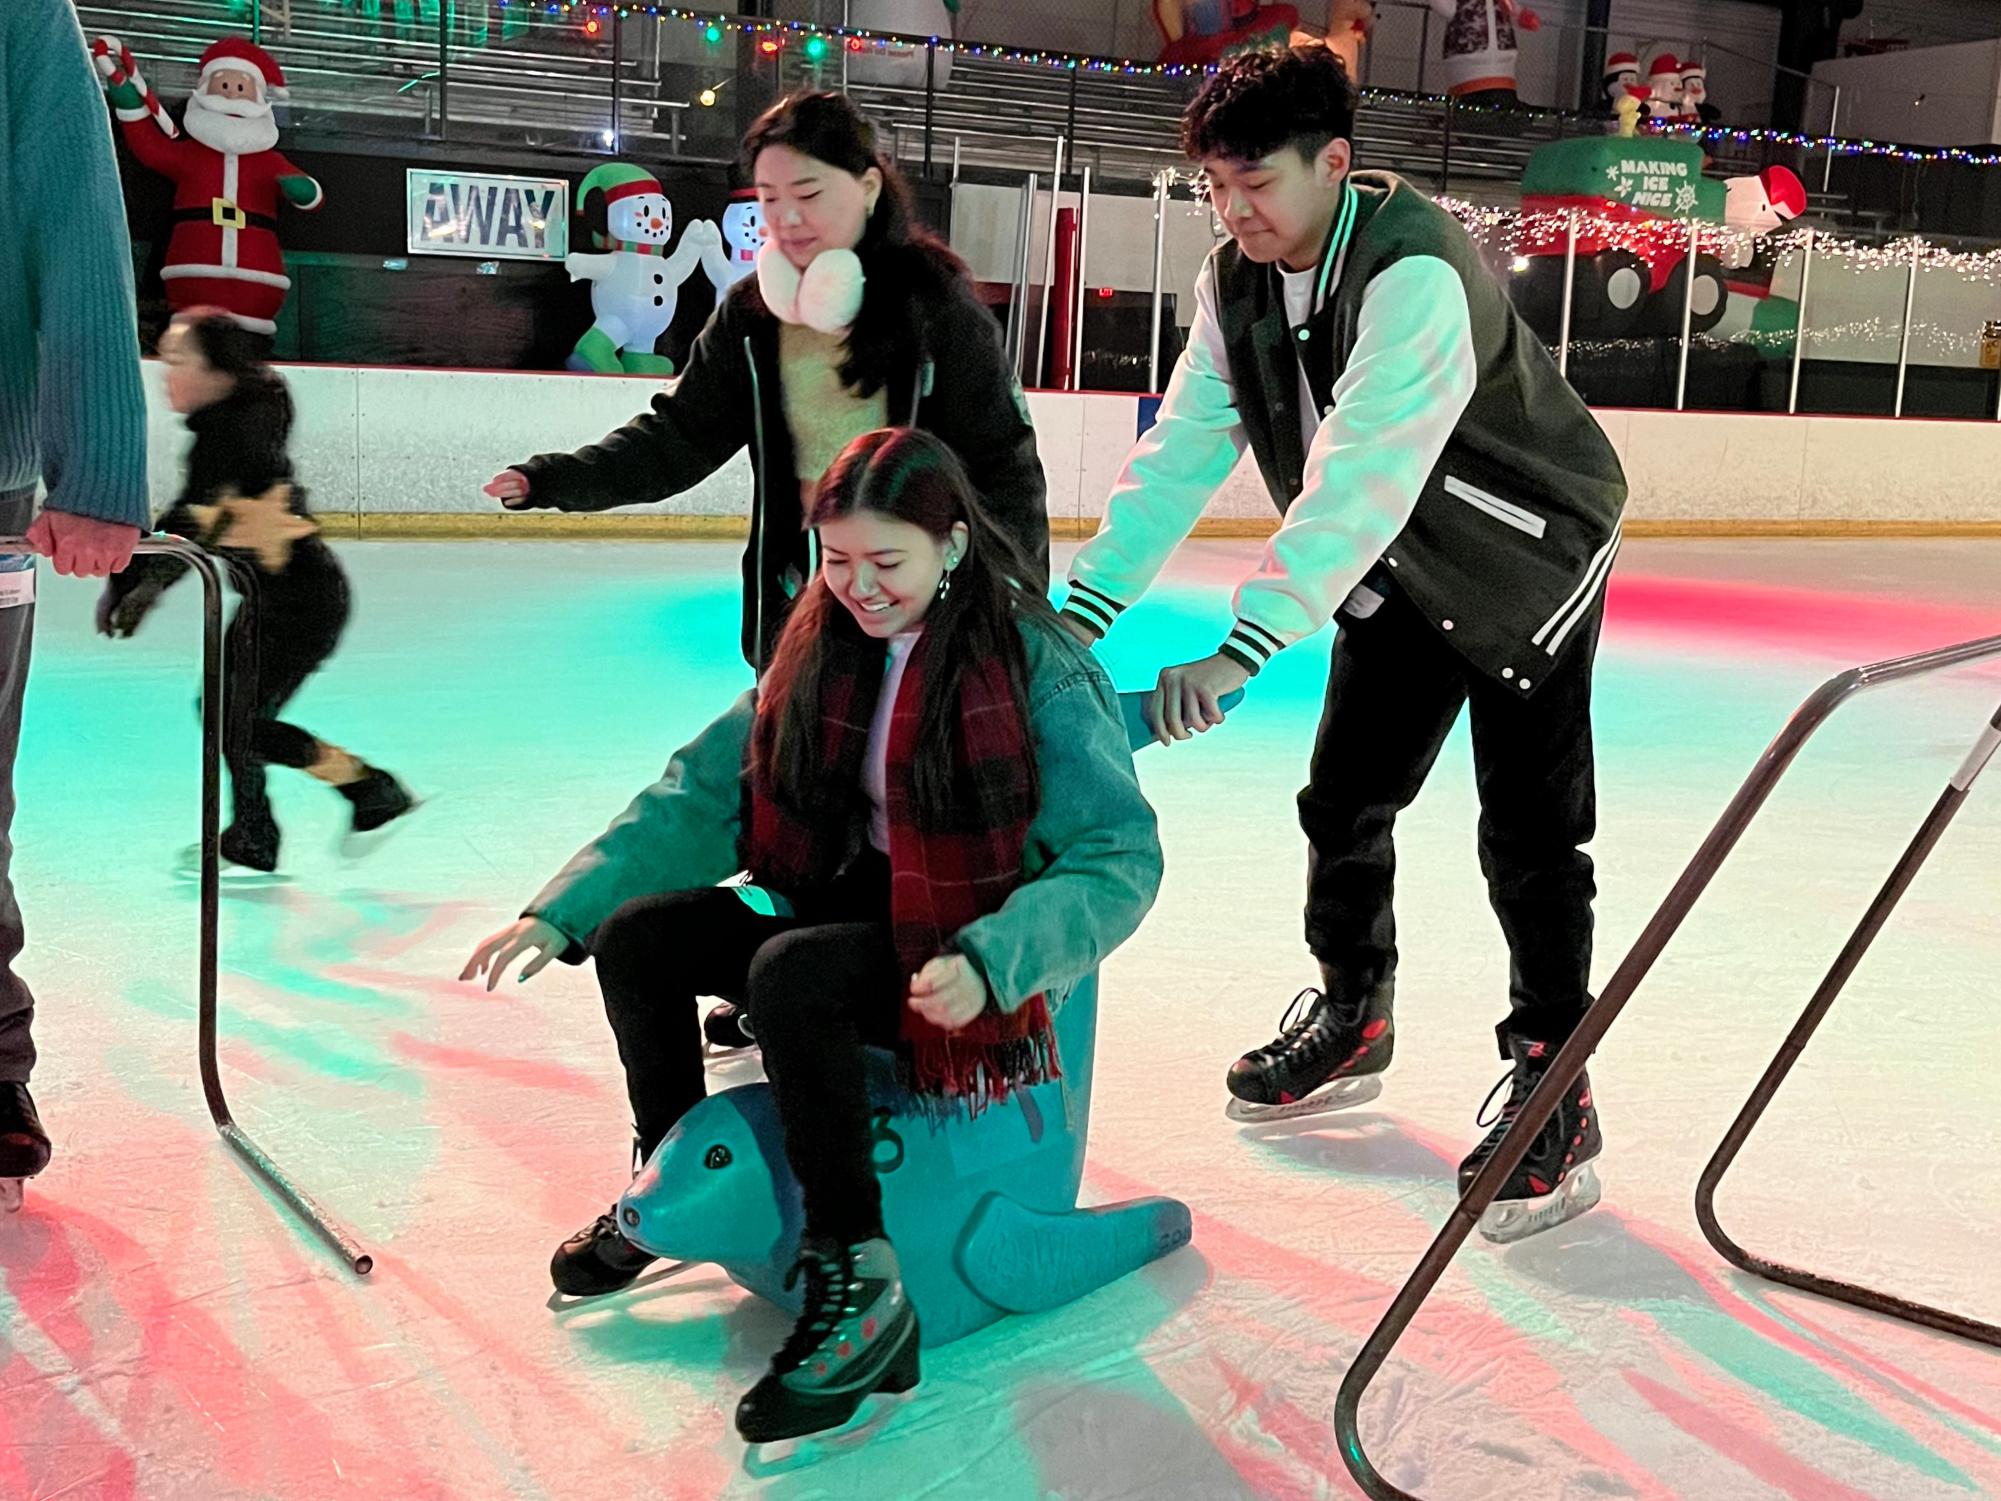 Ice skating social for Circle K International club members during winter.